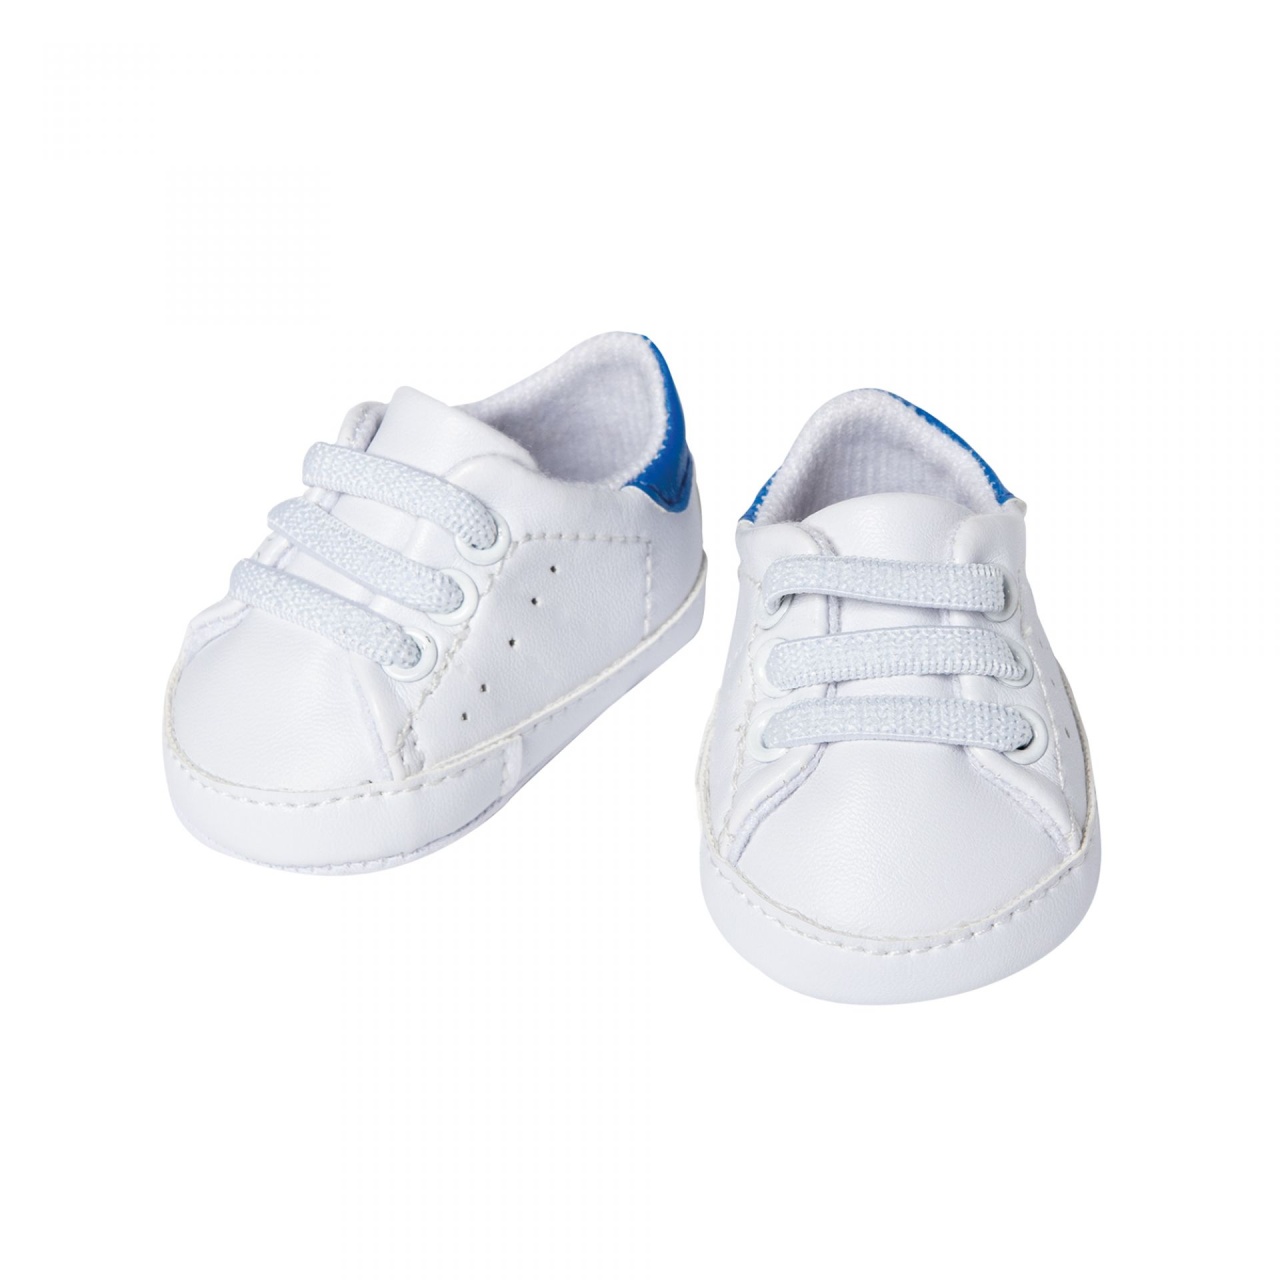 Heless Puppenkleidung Sneakers weiß Gr. 30 - 34 cm